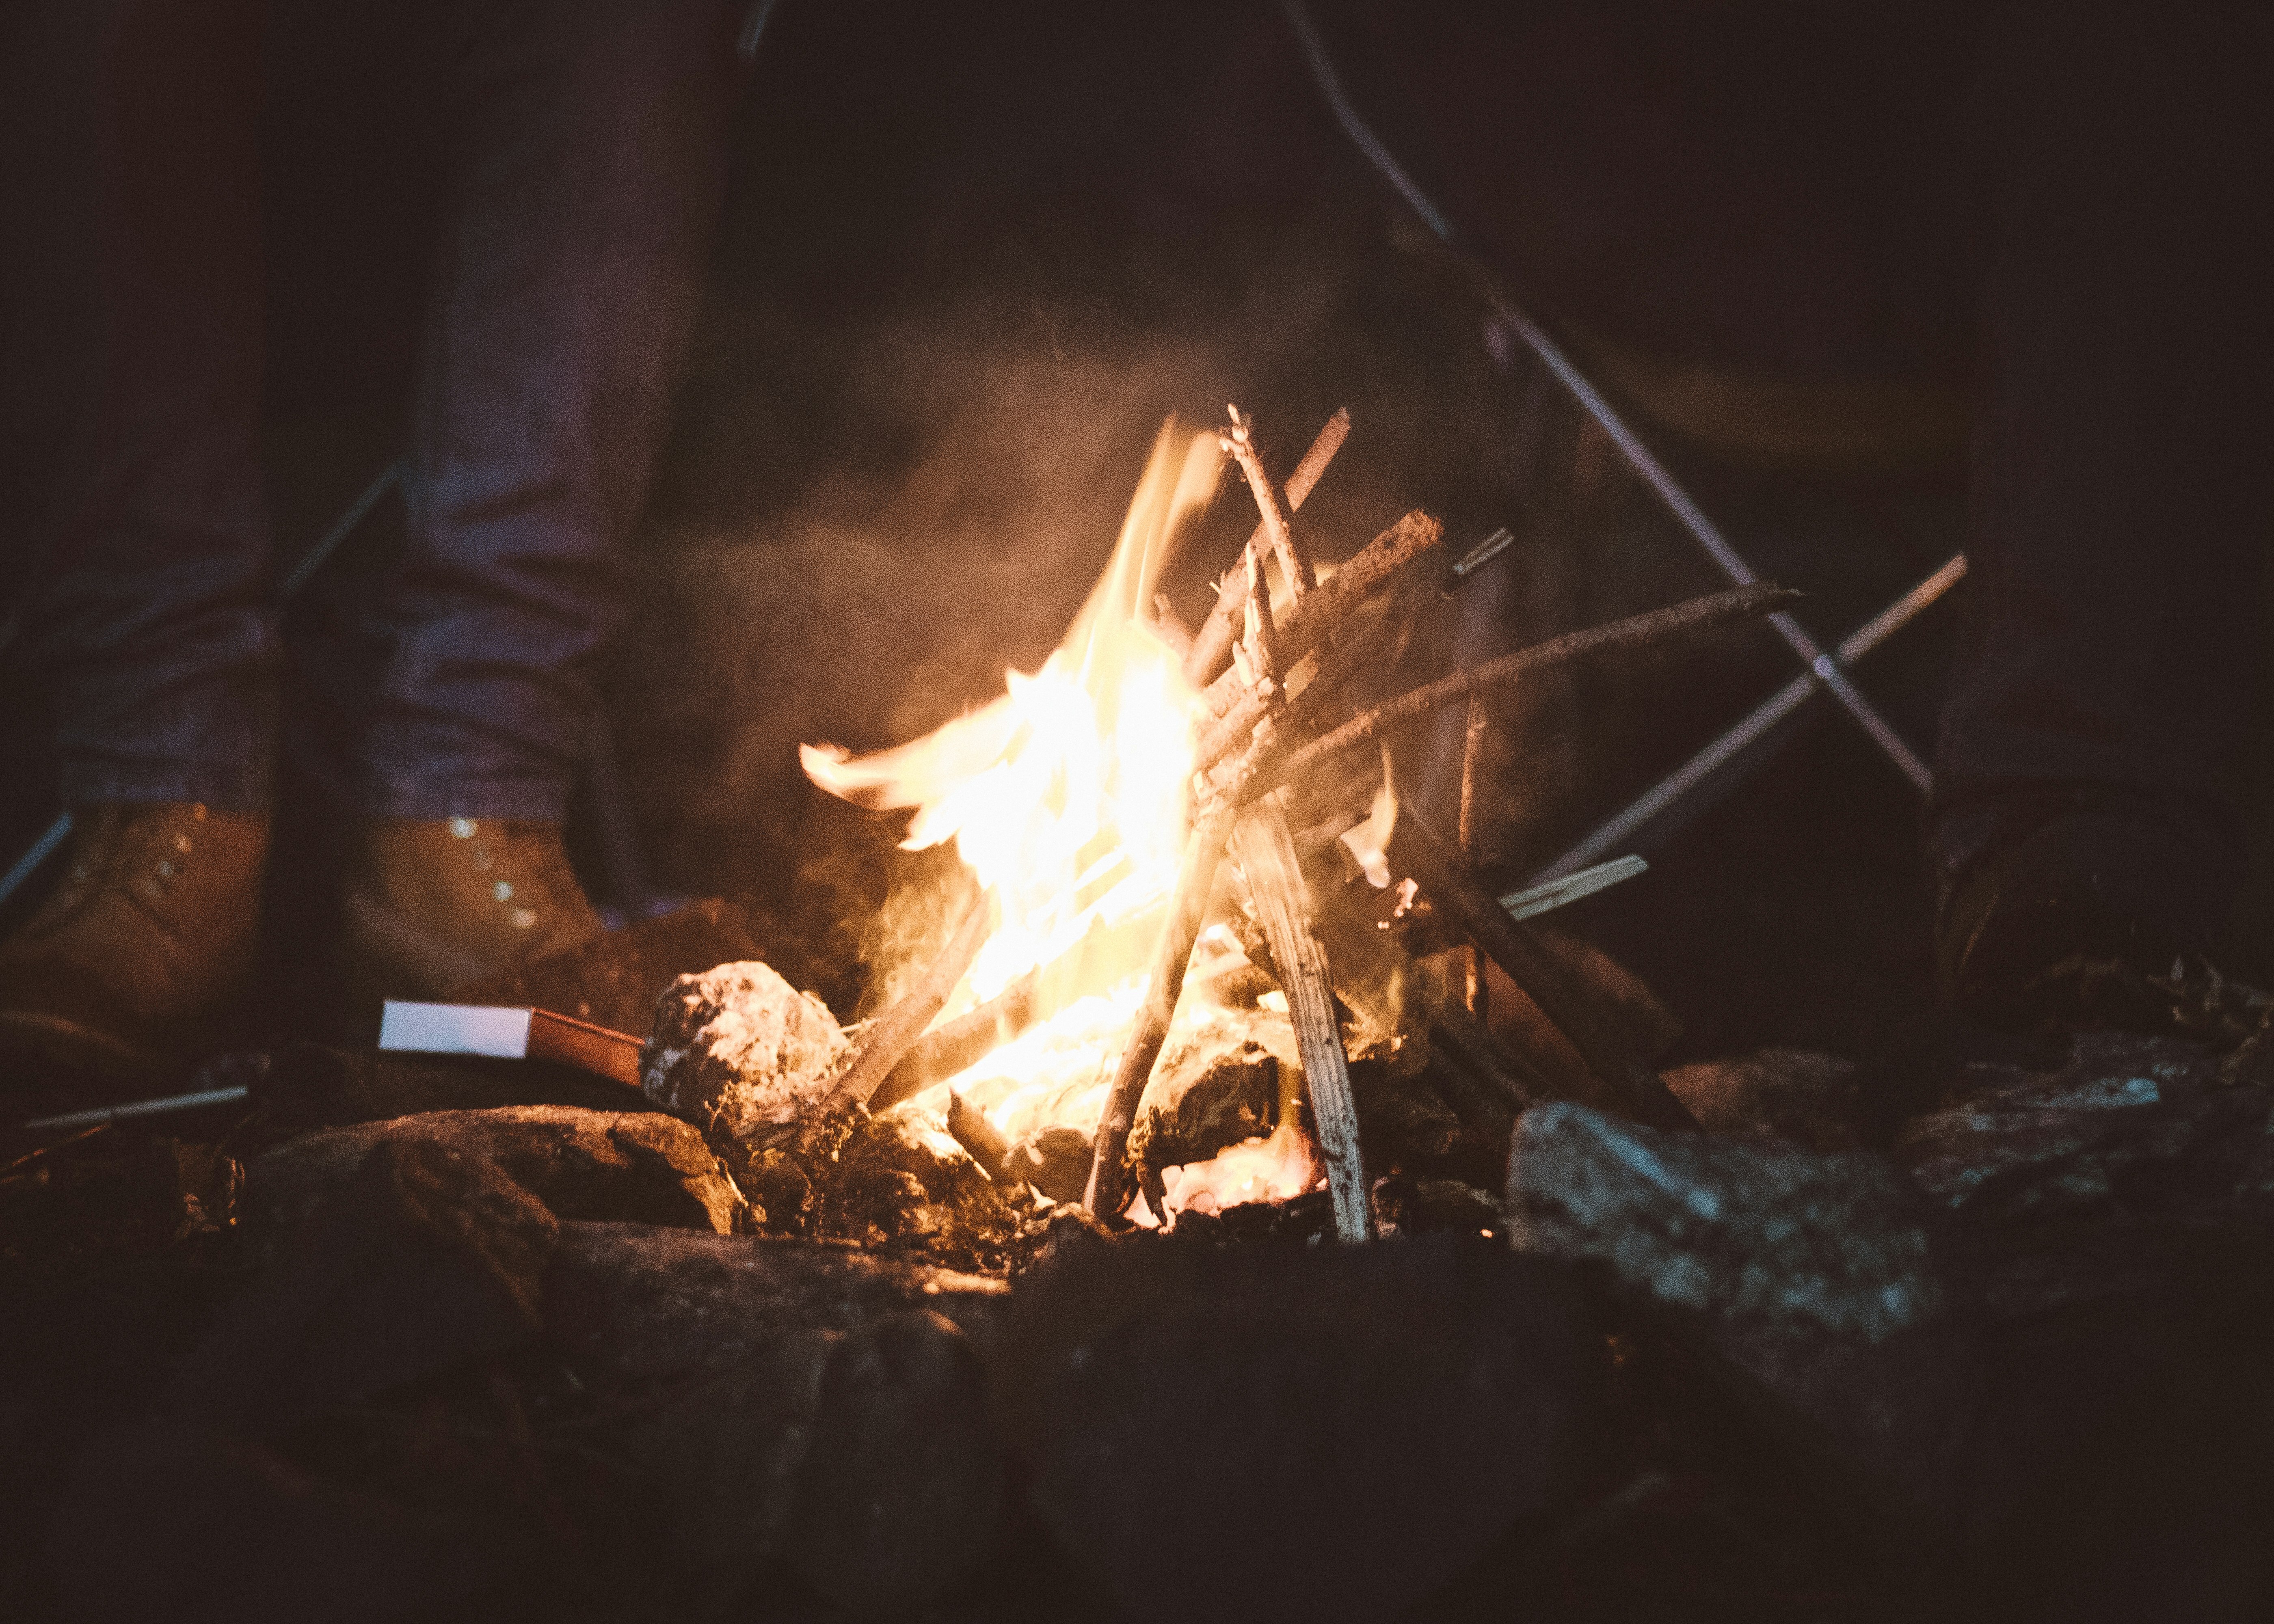 person standing near campfire